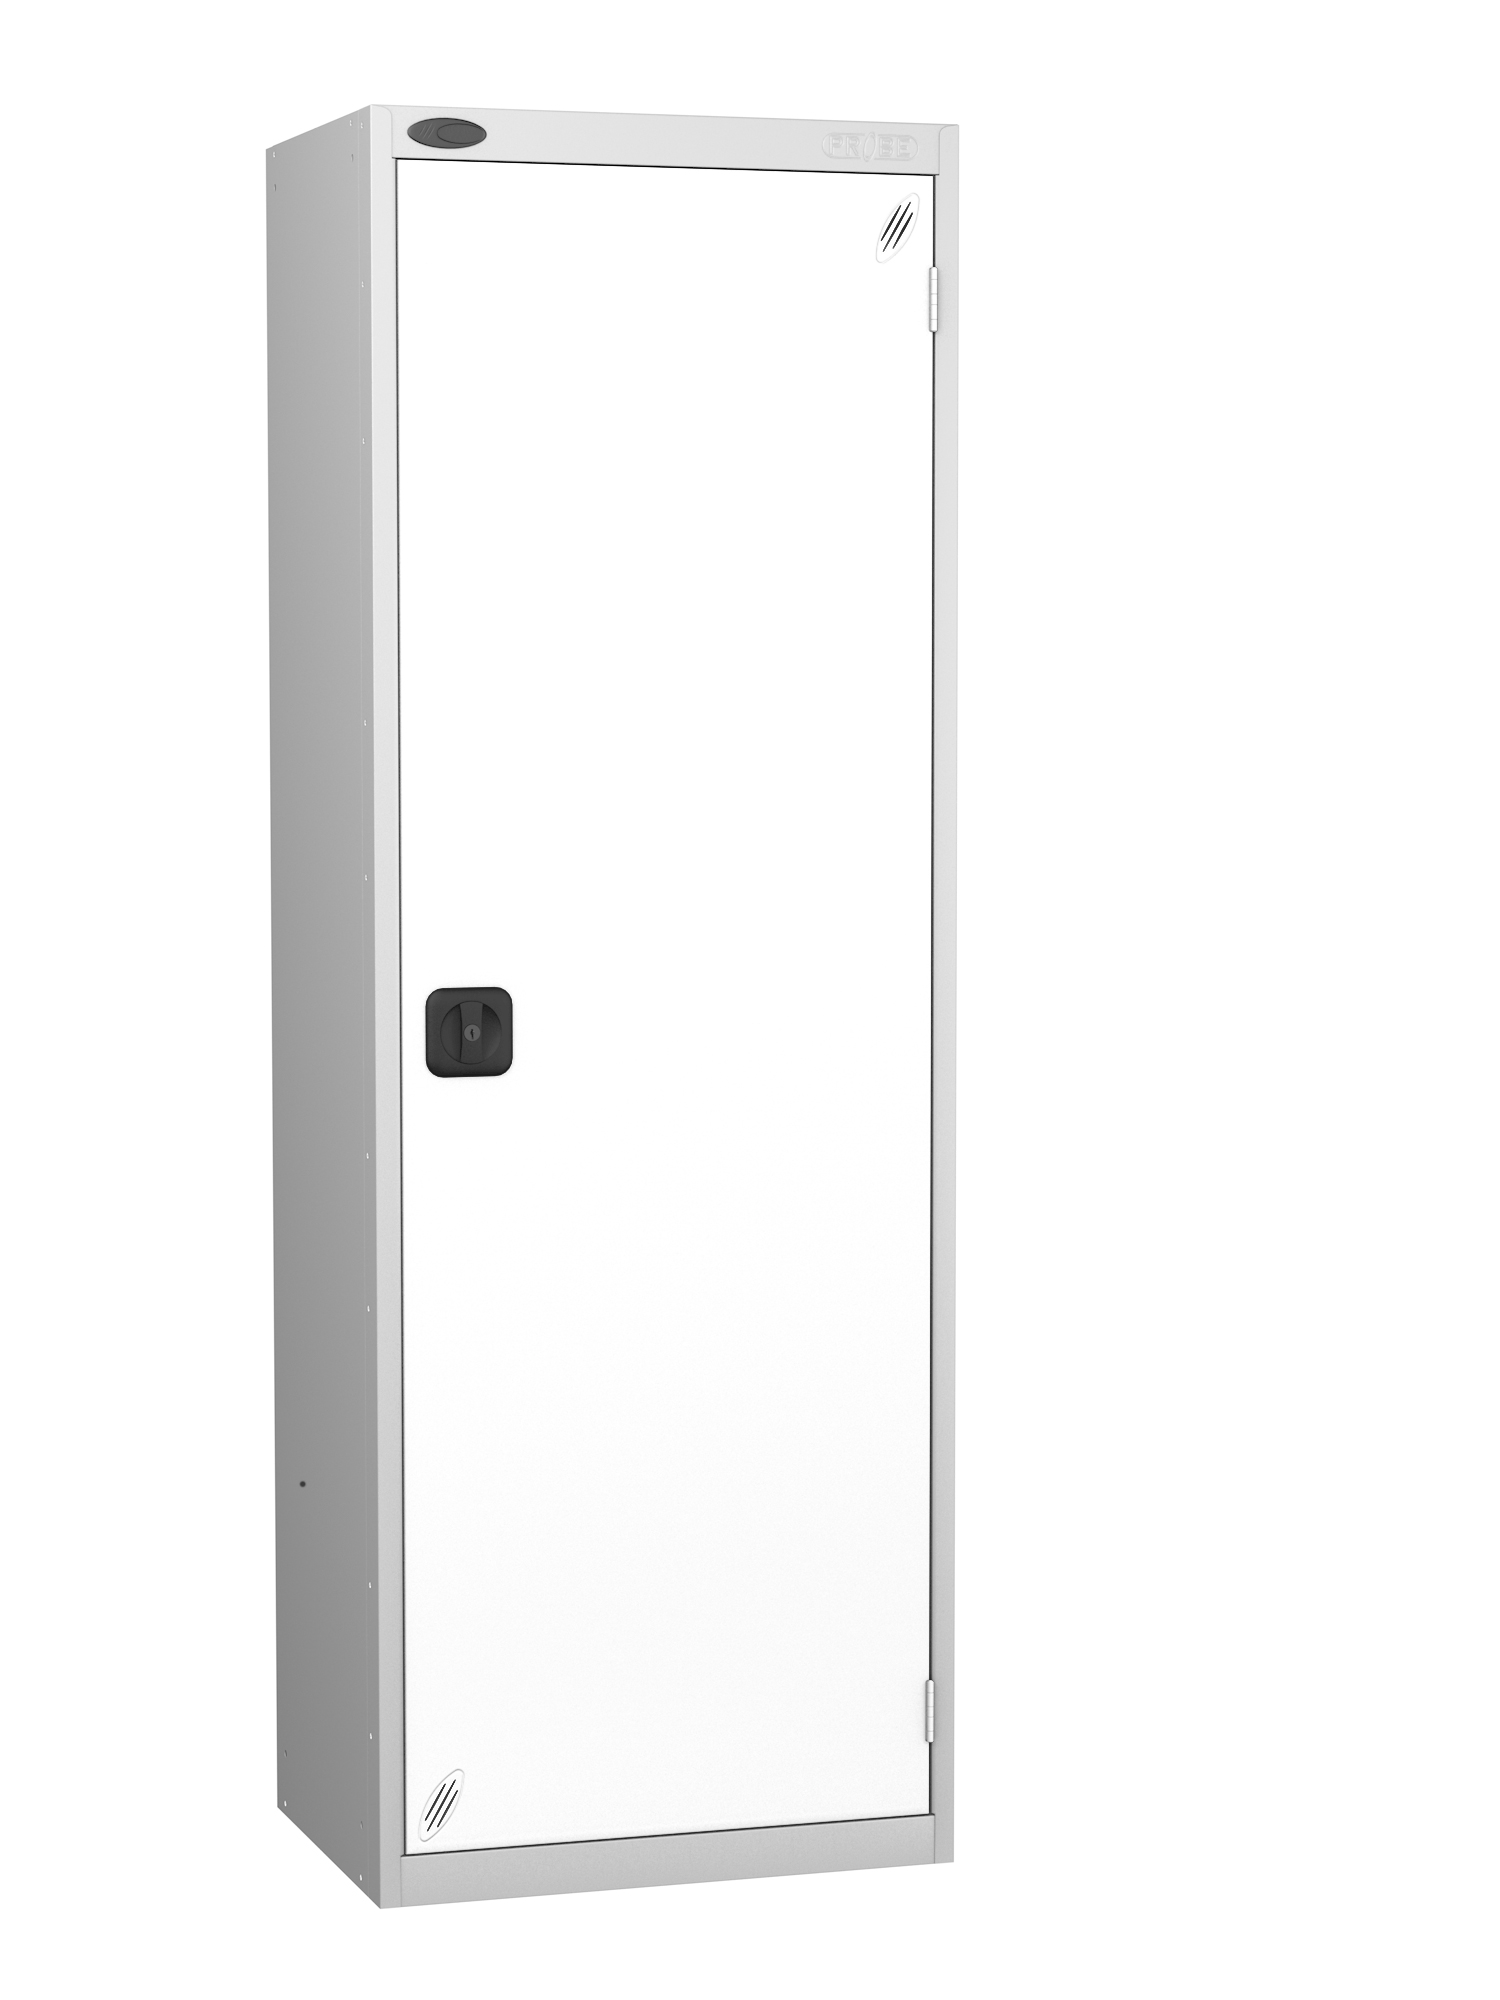 Probe high capacity specialist locker with white door